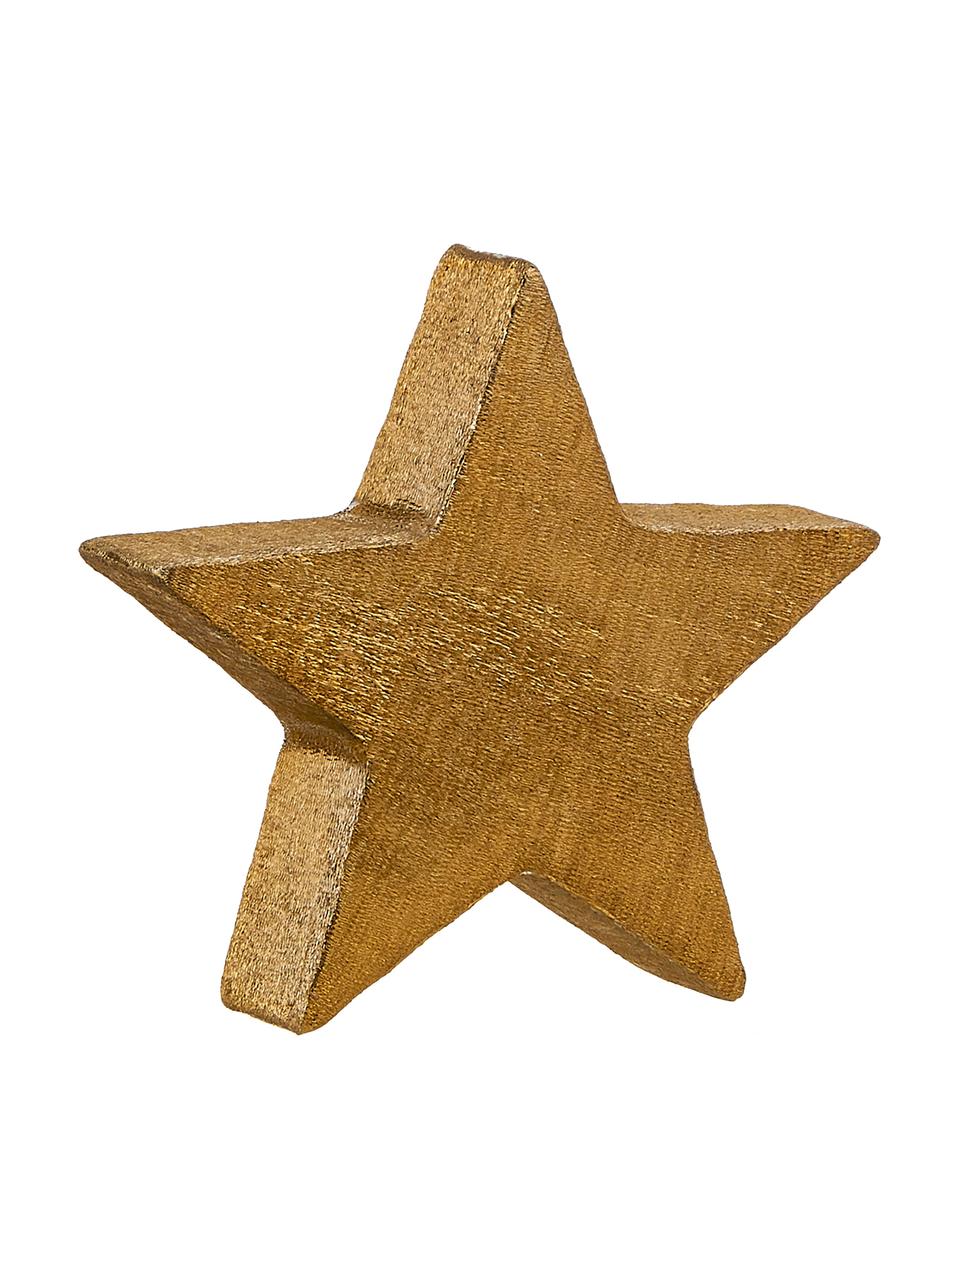 Dekorácia Mace-Star, Odtiene zlatej